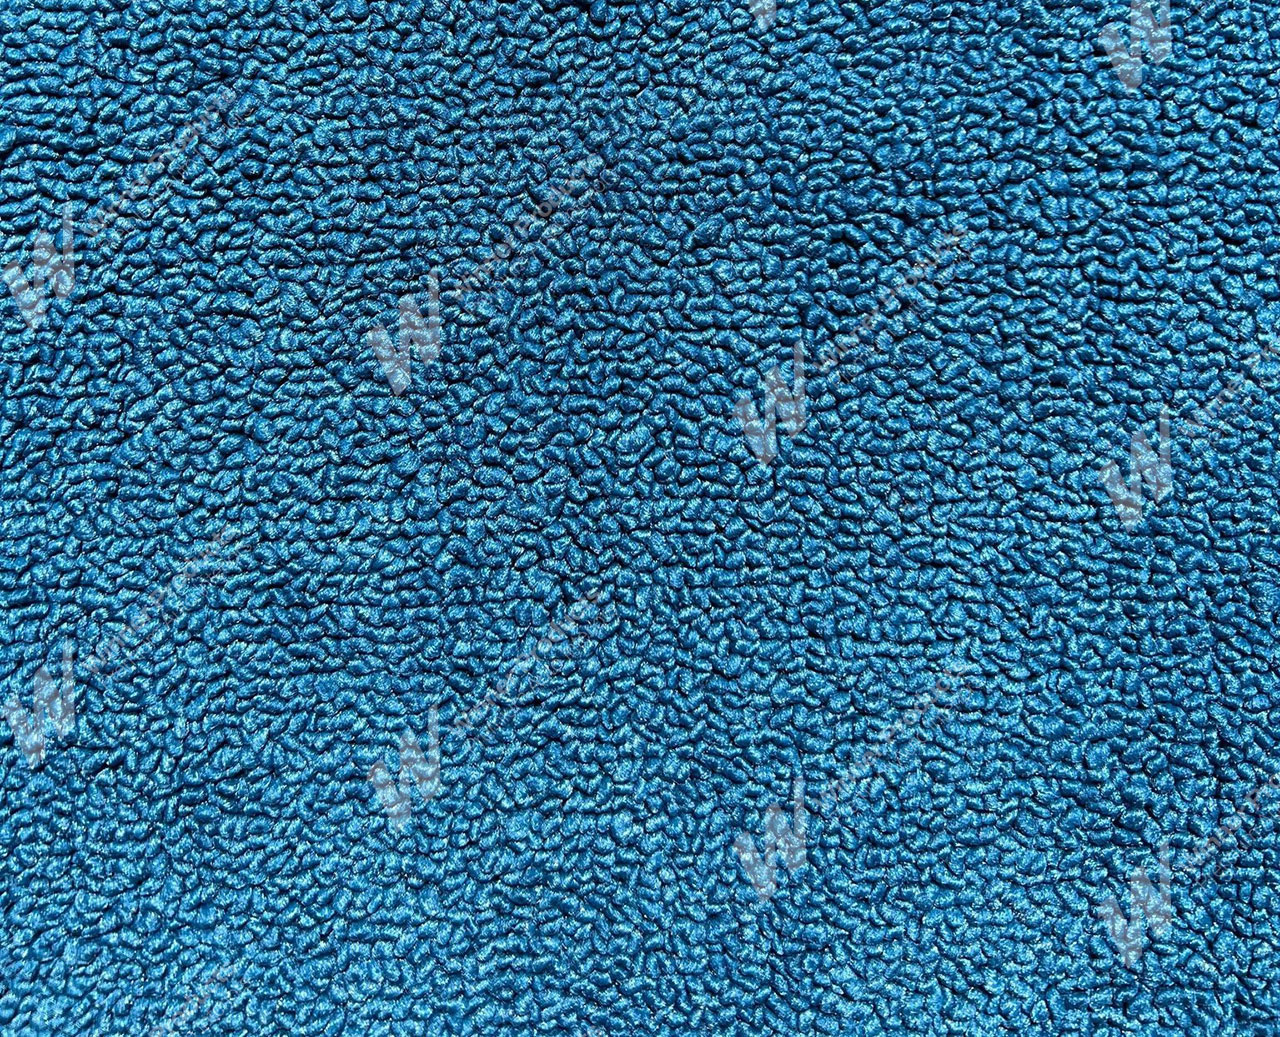 Holden Premier HZ Premier Sedan 23T Light Blue & Cloth Carpet (Image 1 of 1)